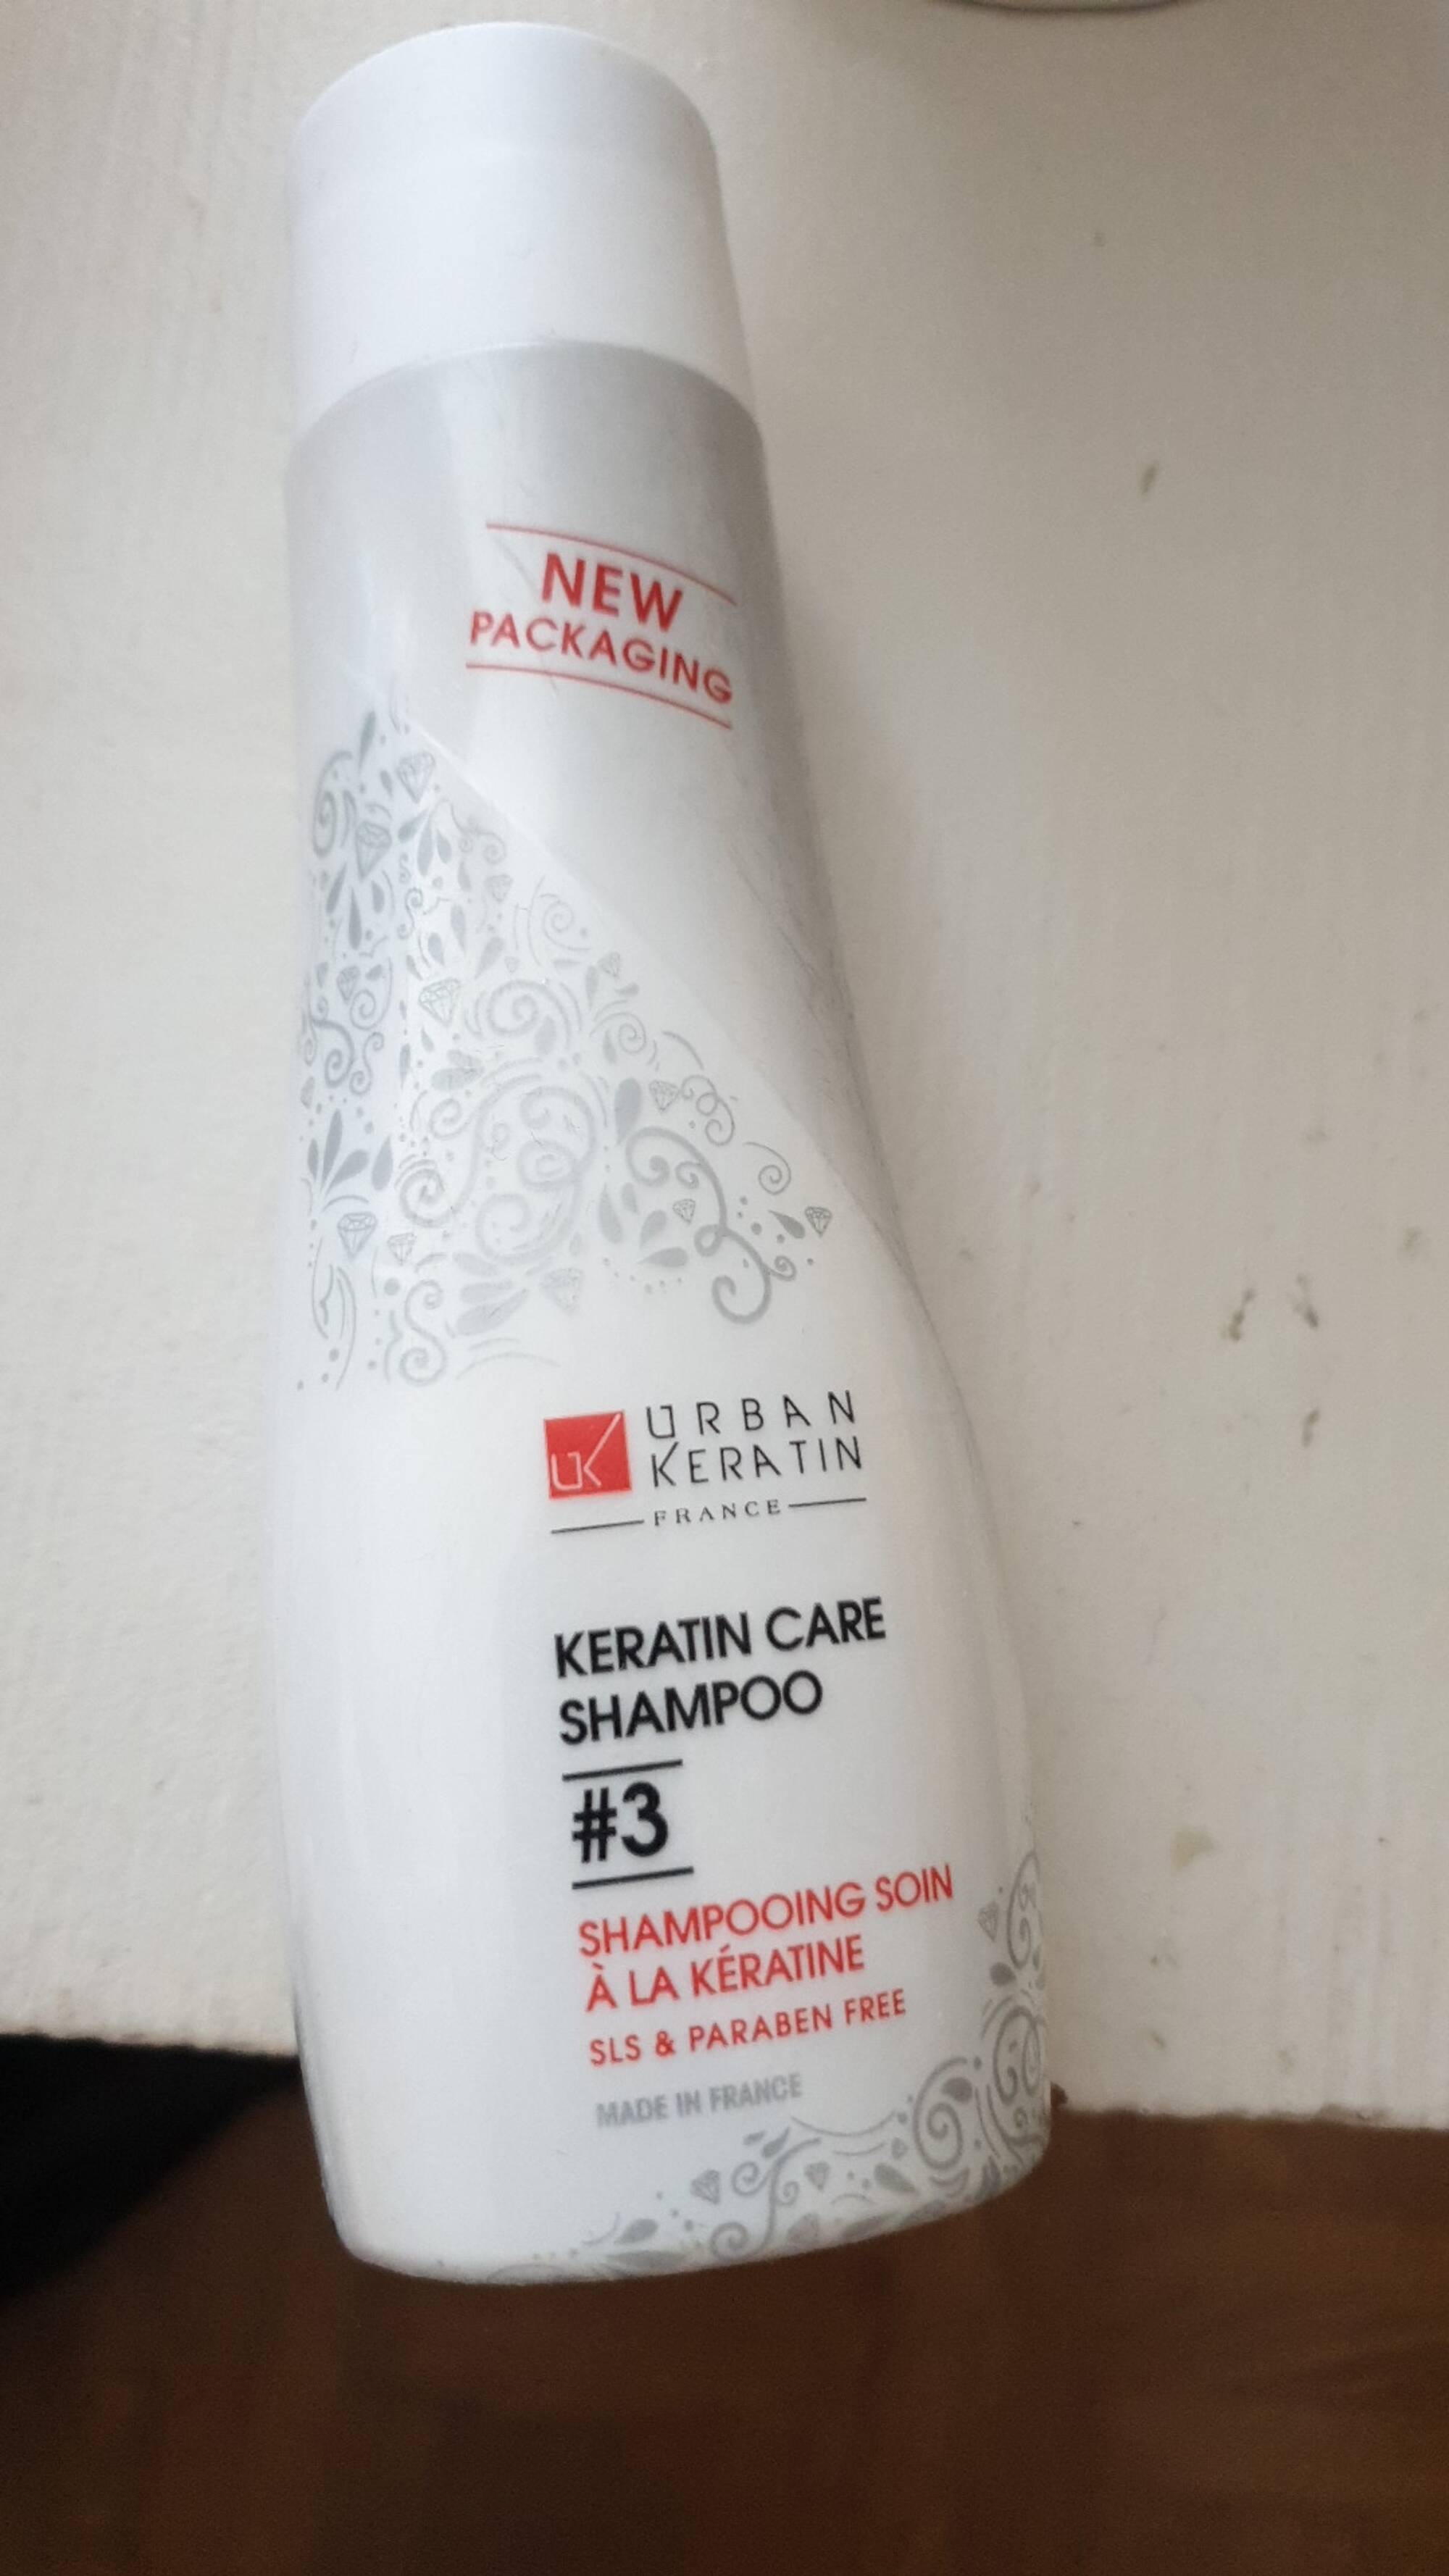 URBAN KERATIN - Shampooing soin à la kératine #3